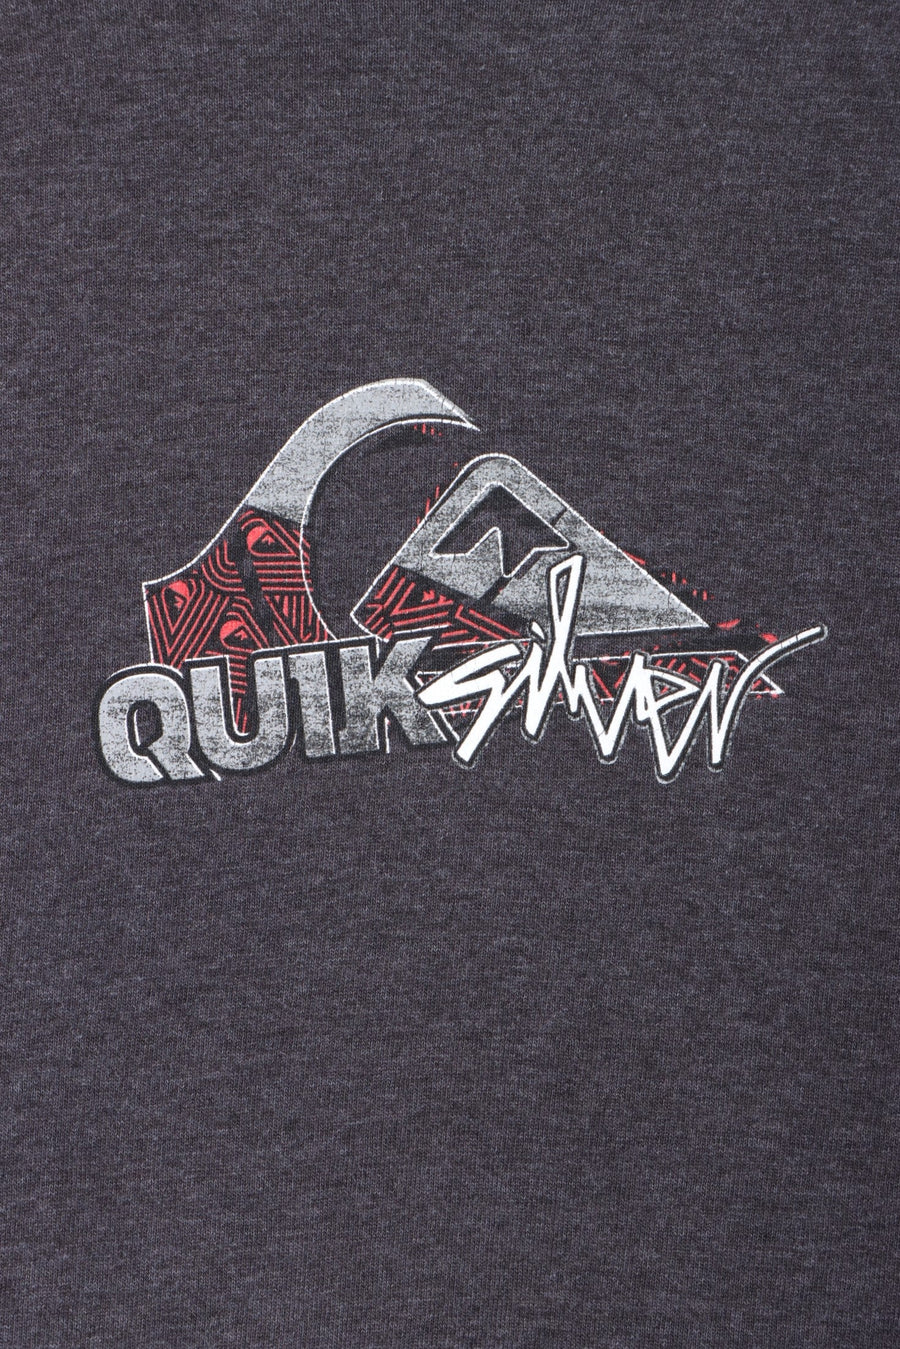 QUIKSILVER Big Logo Front Back Surf T-Shirt (XL)